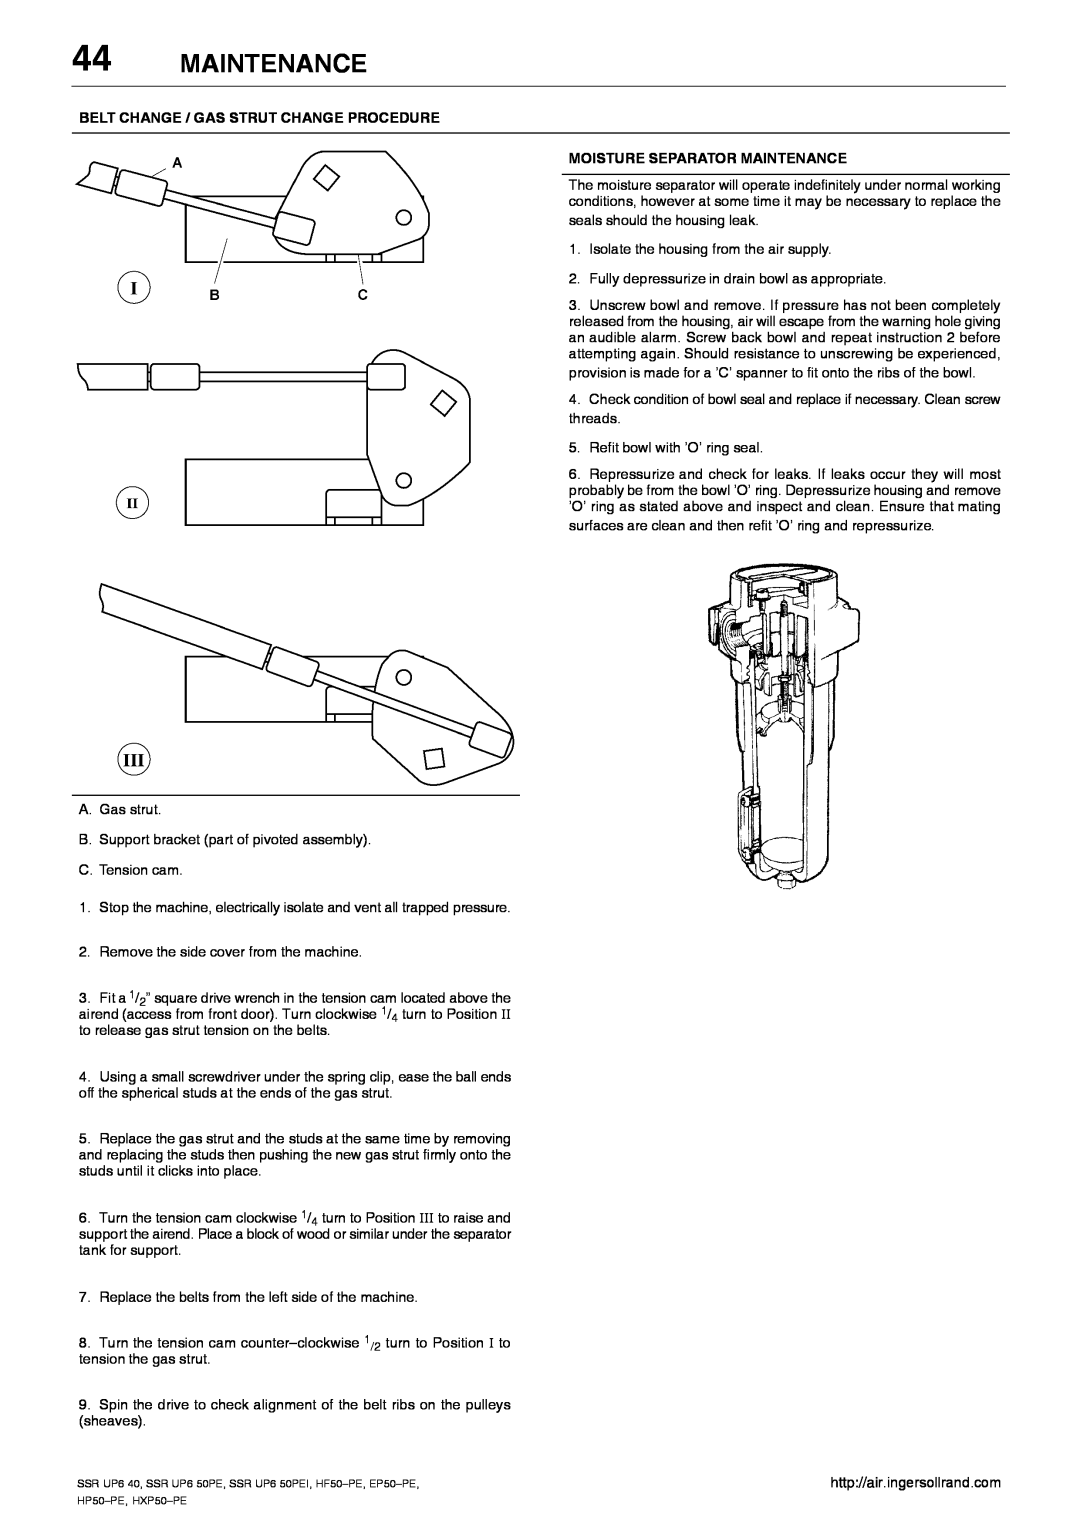 Ingersoll-Rand HXP50-PE, SSR UP6 40, EP50-PE Belt Change / Gas Strut Change Procedure, Moisture Separator Maintenance 